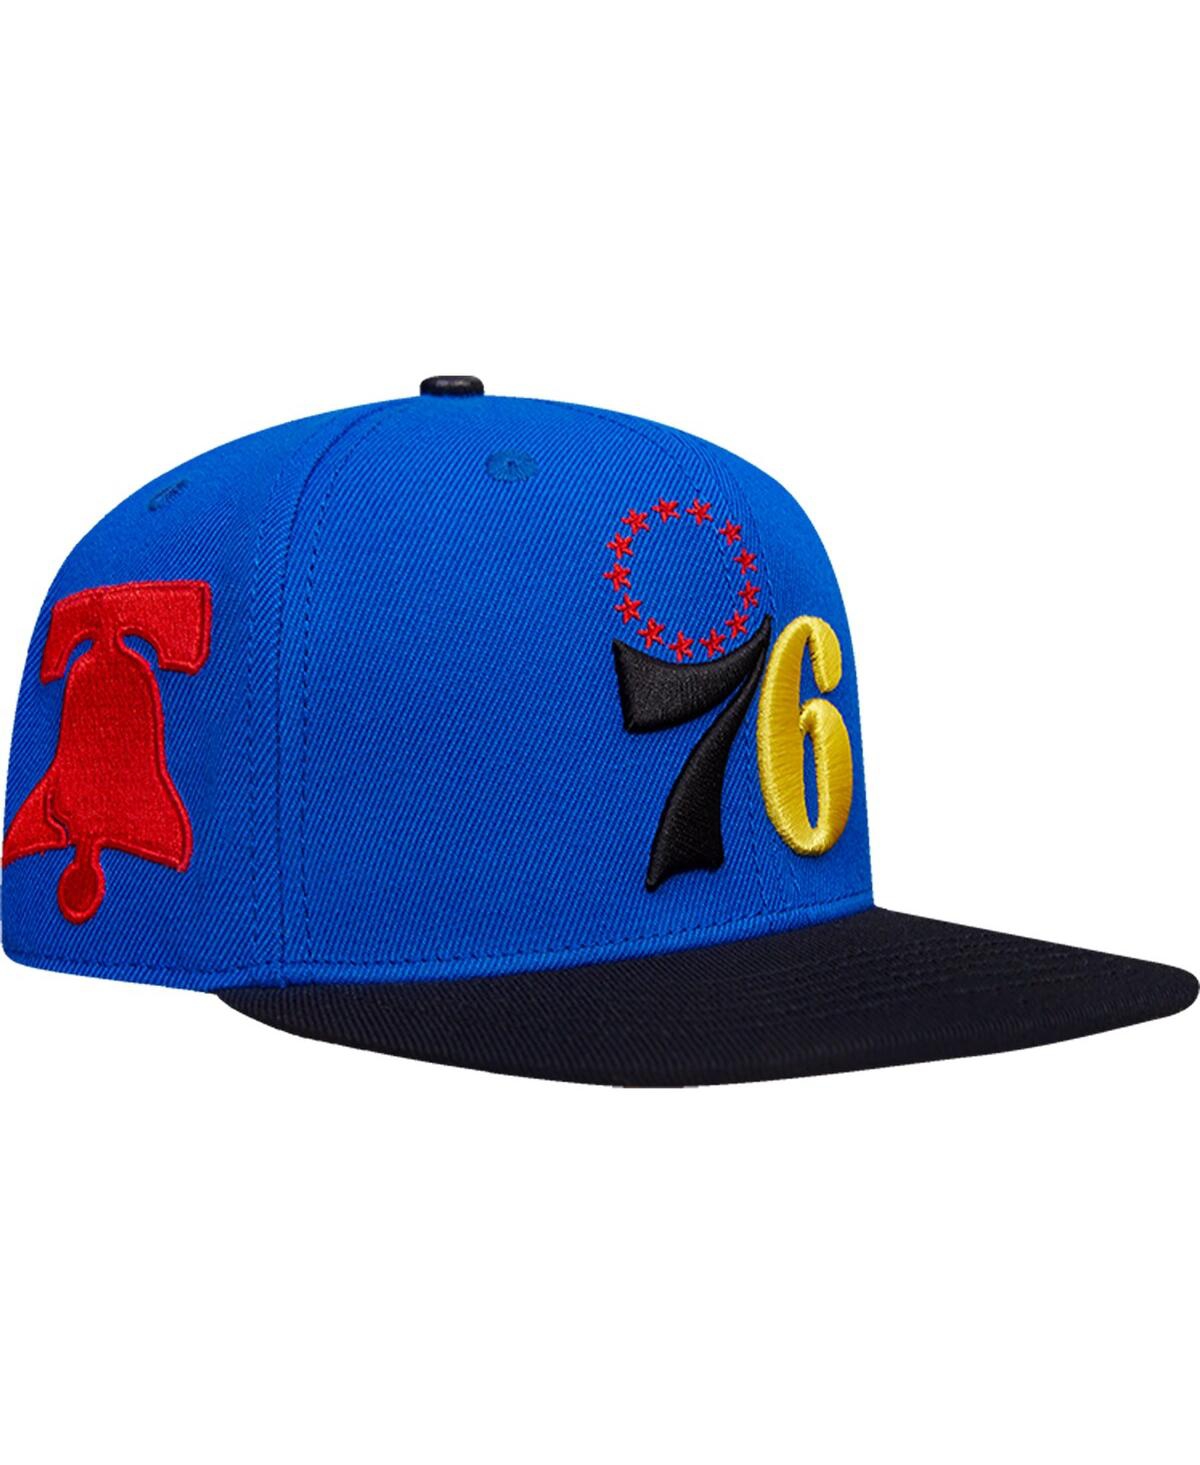 Shop Pro Standard Men's  Royal Philadelphia 76ers Any Condition Snapback Hat